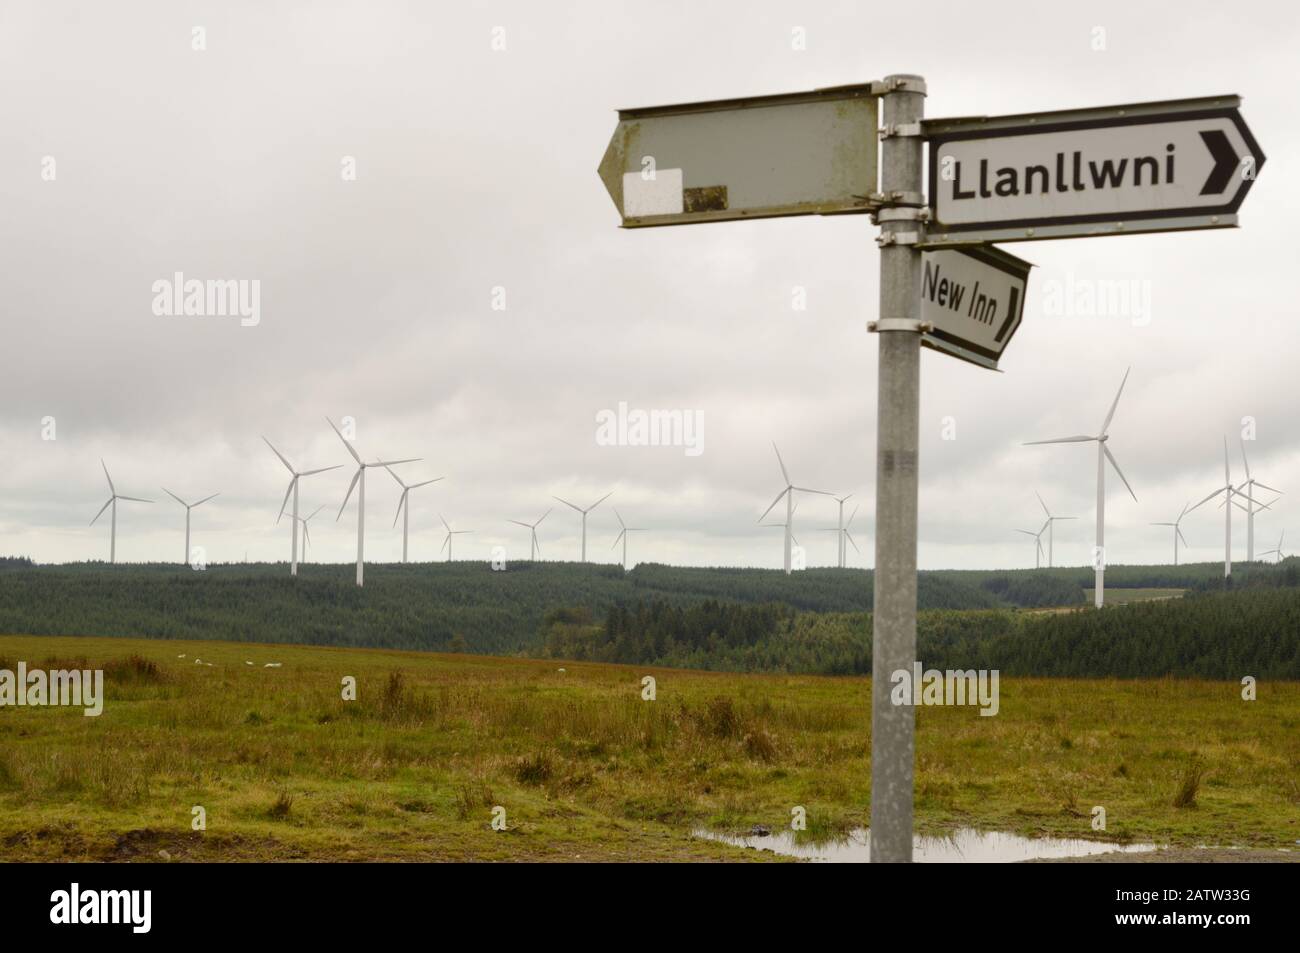 Mixed upland land use, wind turbines tower above commercial forestry alongside upland sheep pasture, Llanllwni, Wales, UK Stock Photo